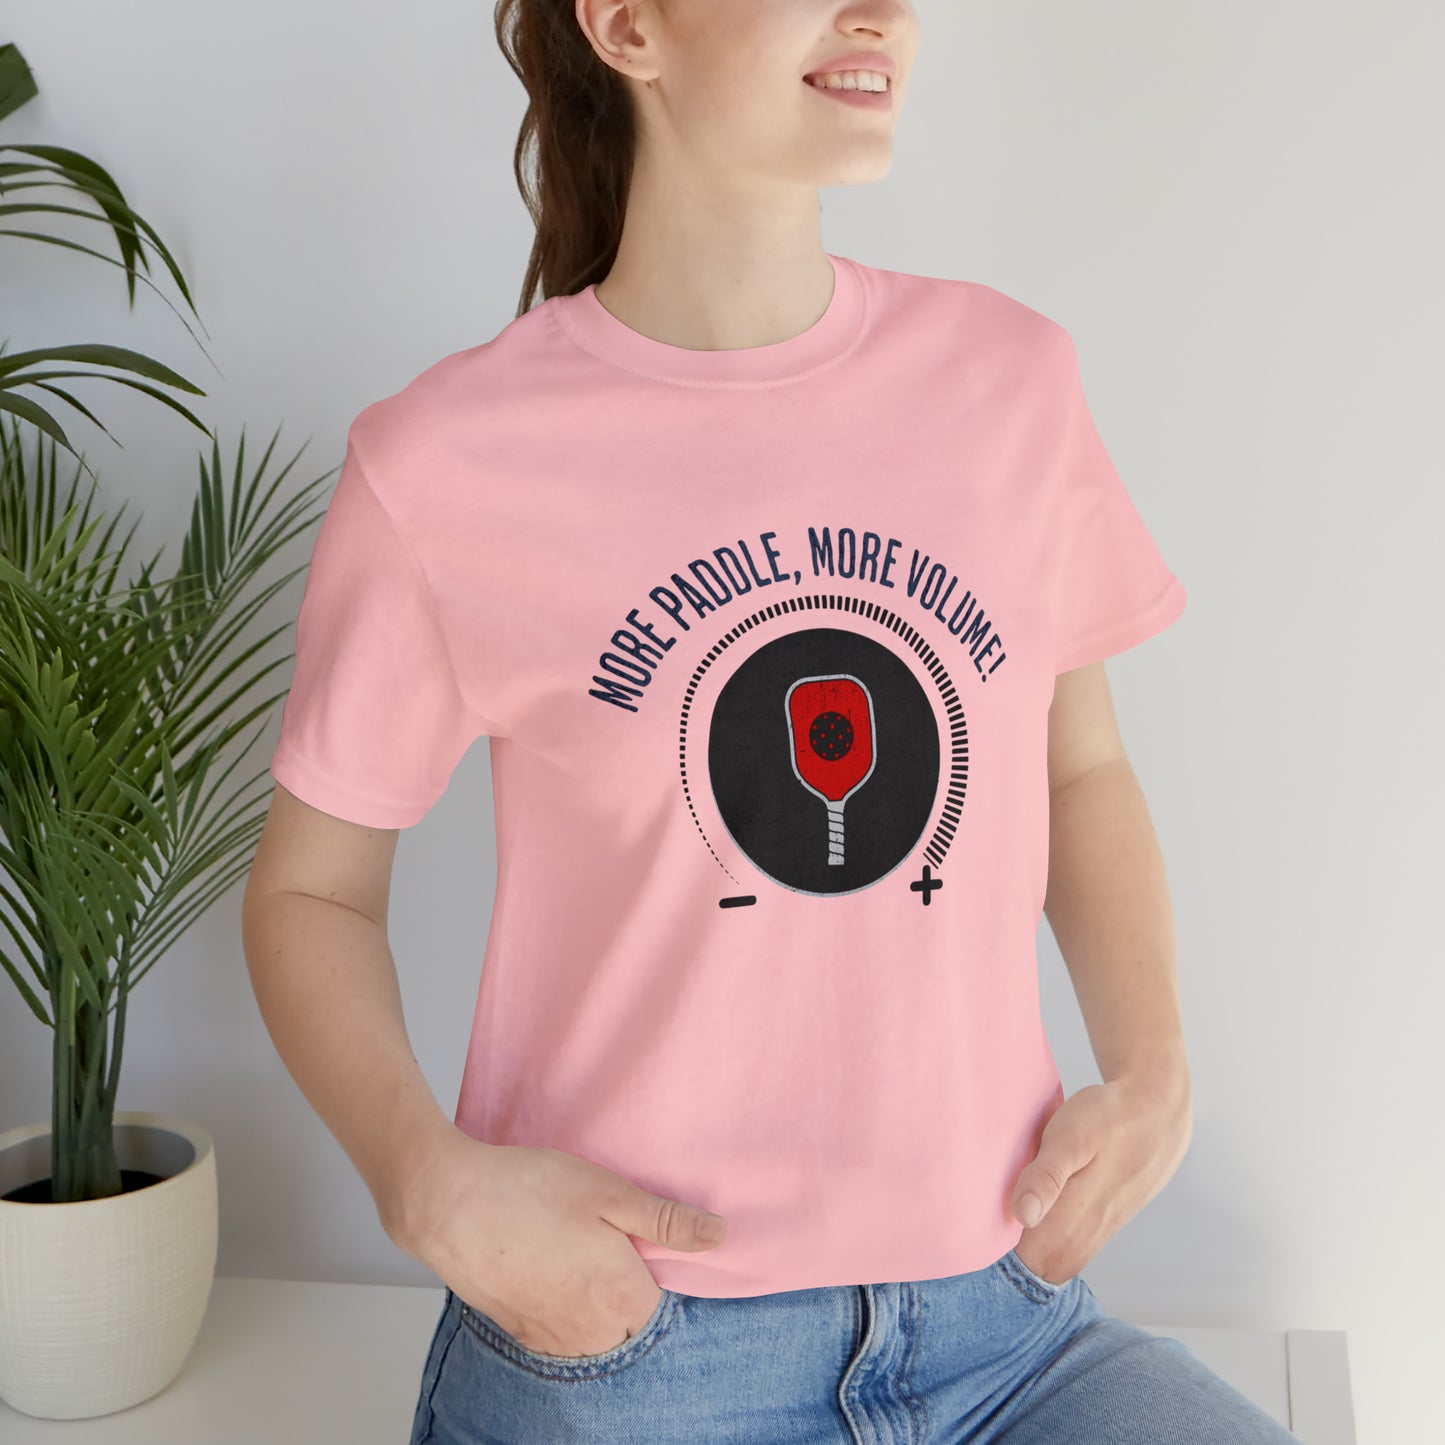 More Paddle, More Volume: Pickleball T-Shirt